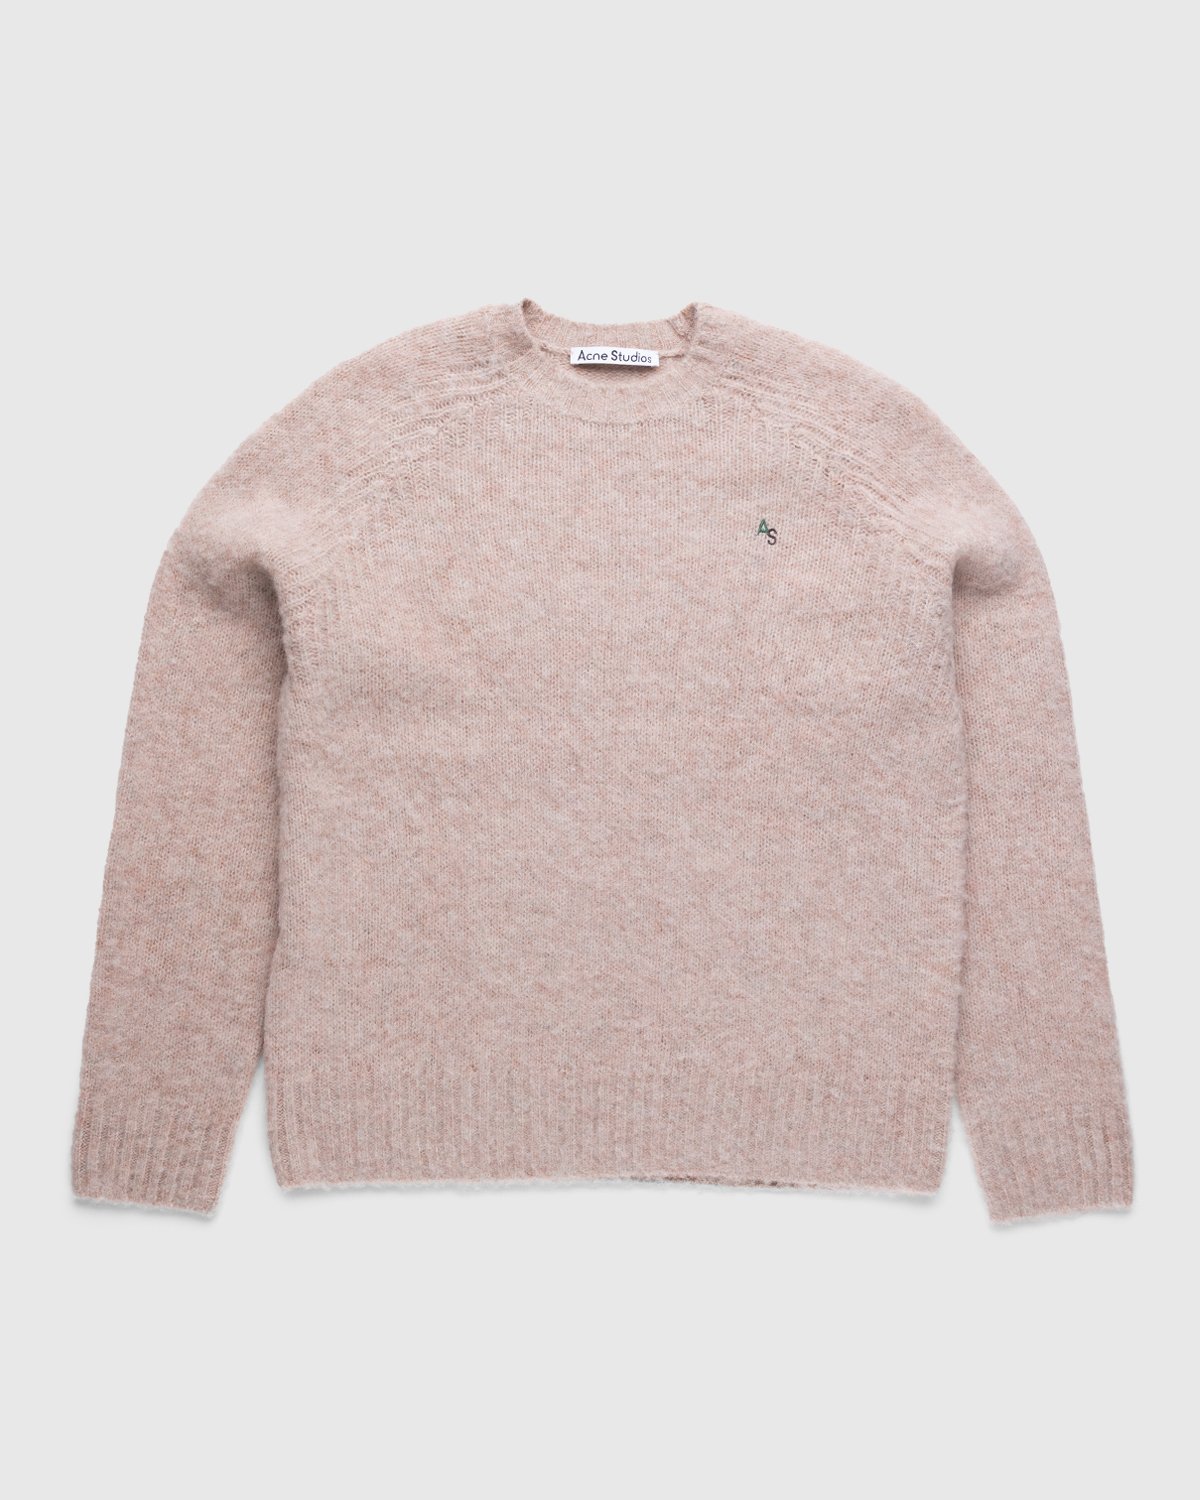 Acne Studios - Knit Sweater Pastel Pink - Clothing - Pink - Image 1